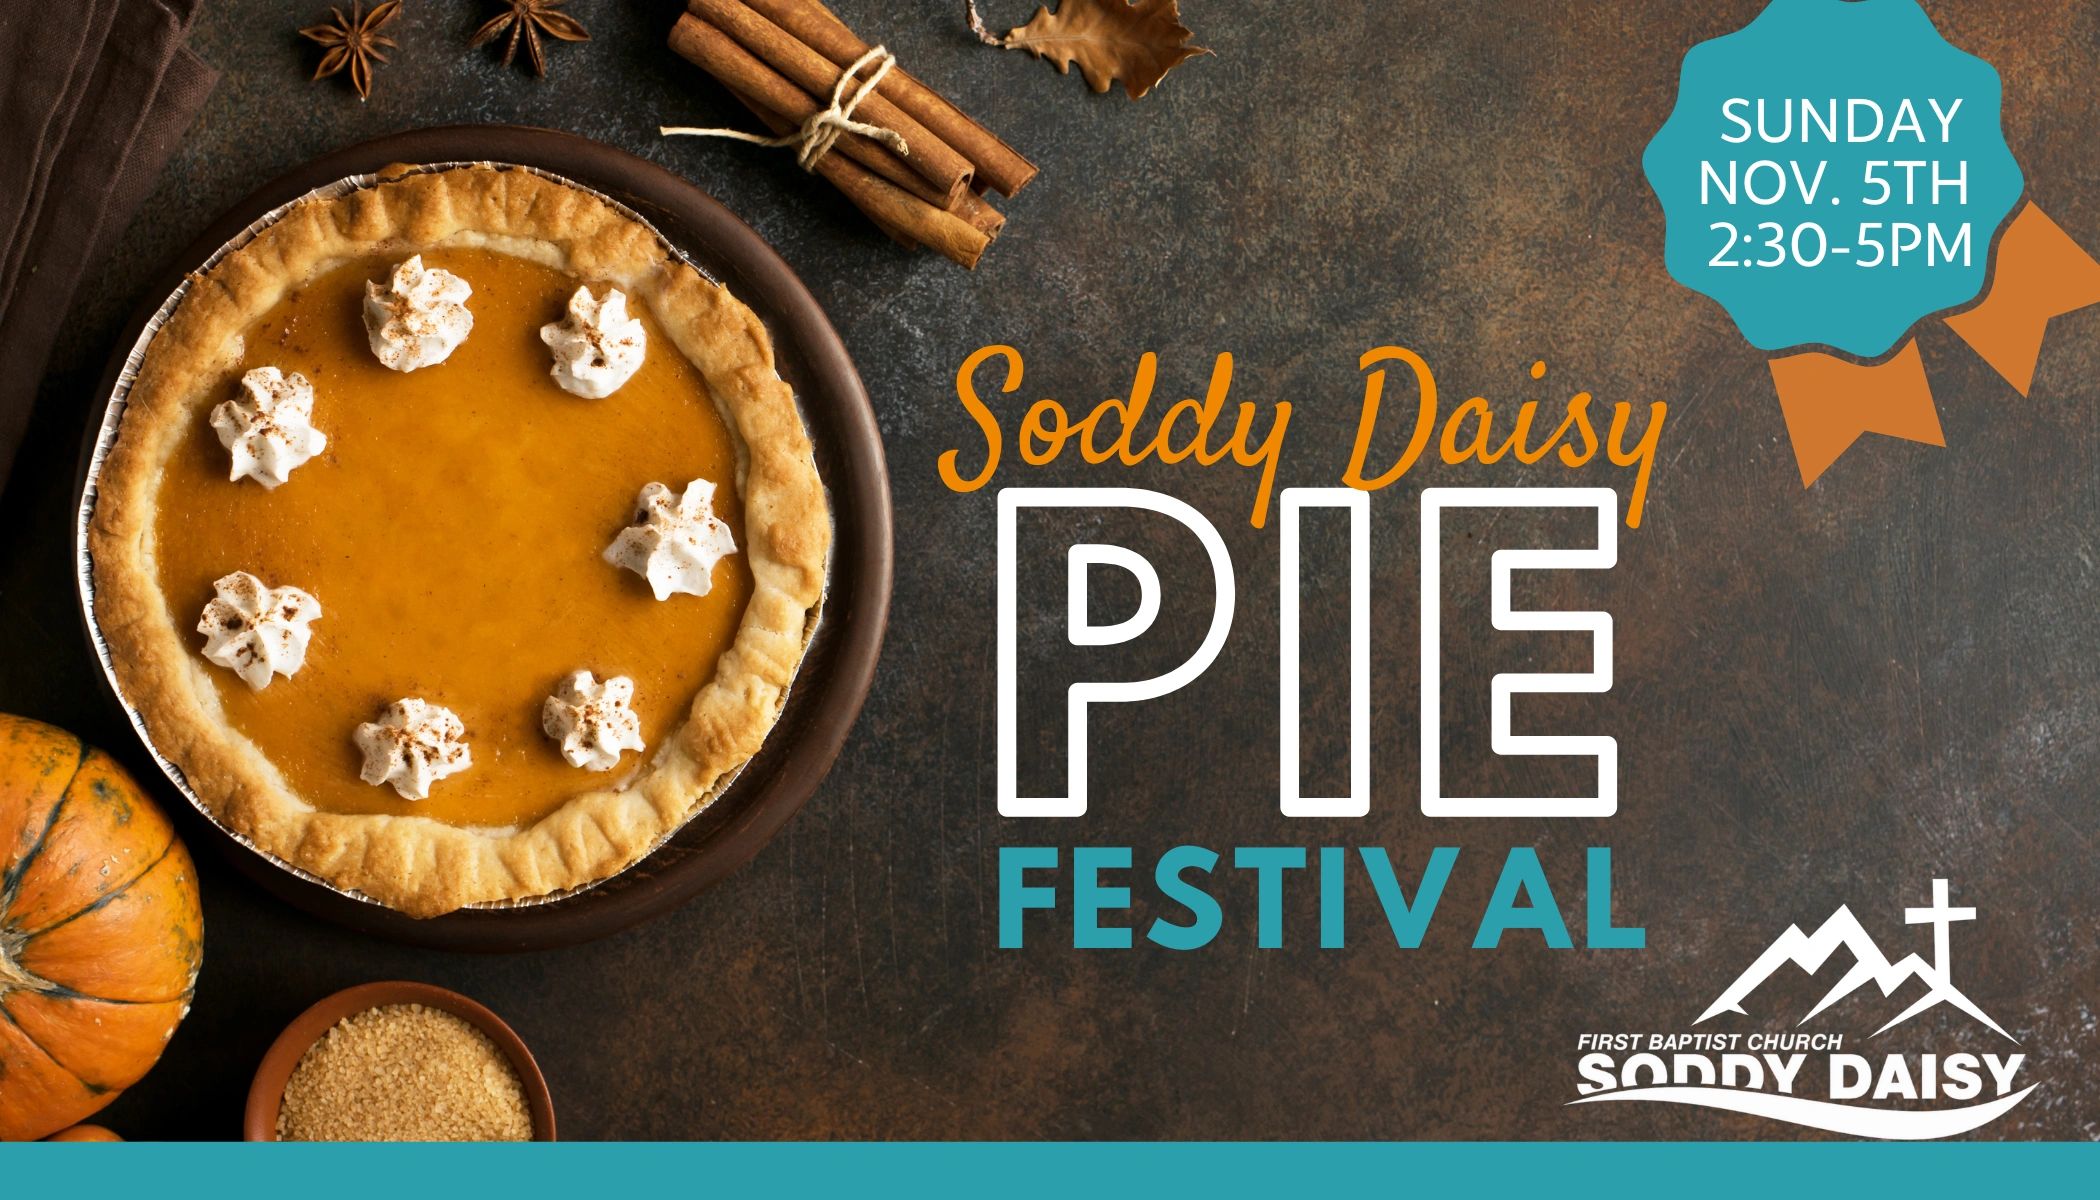 Soddy Daisy Pie Festival